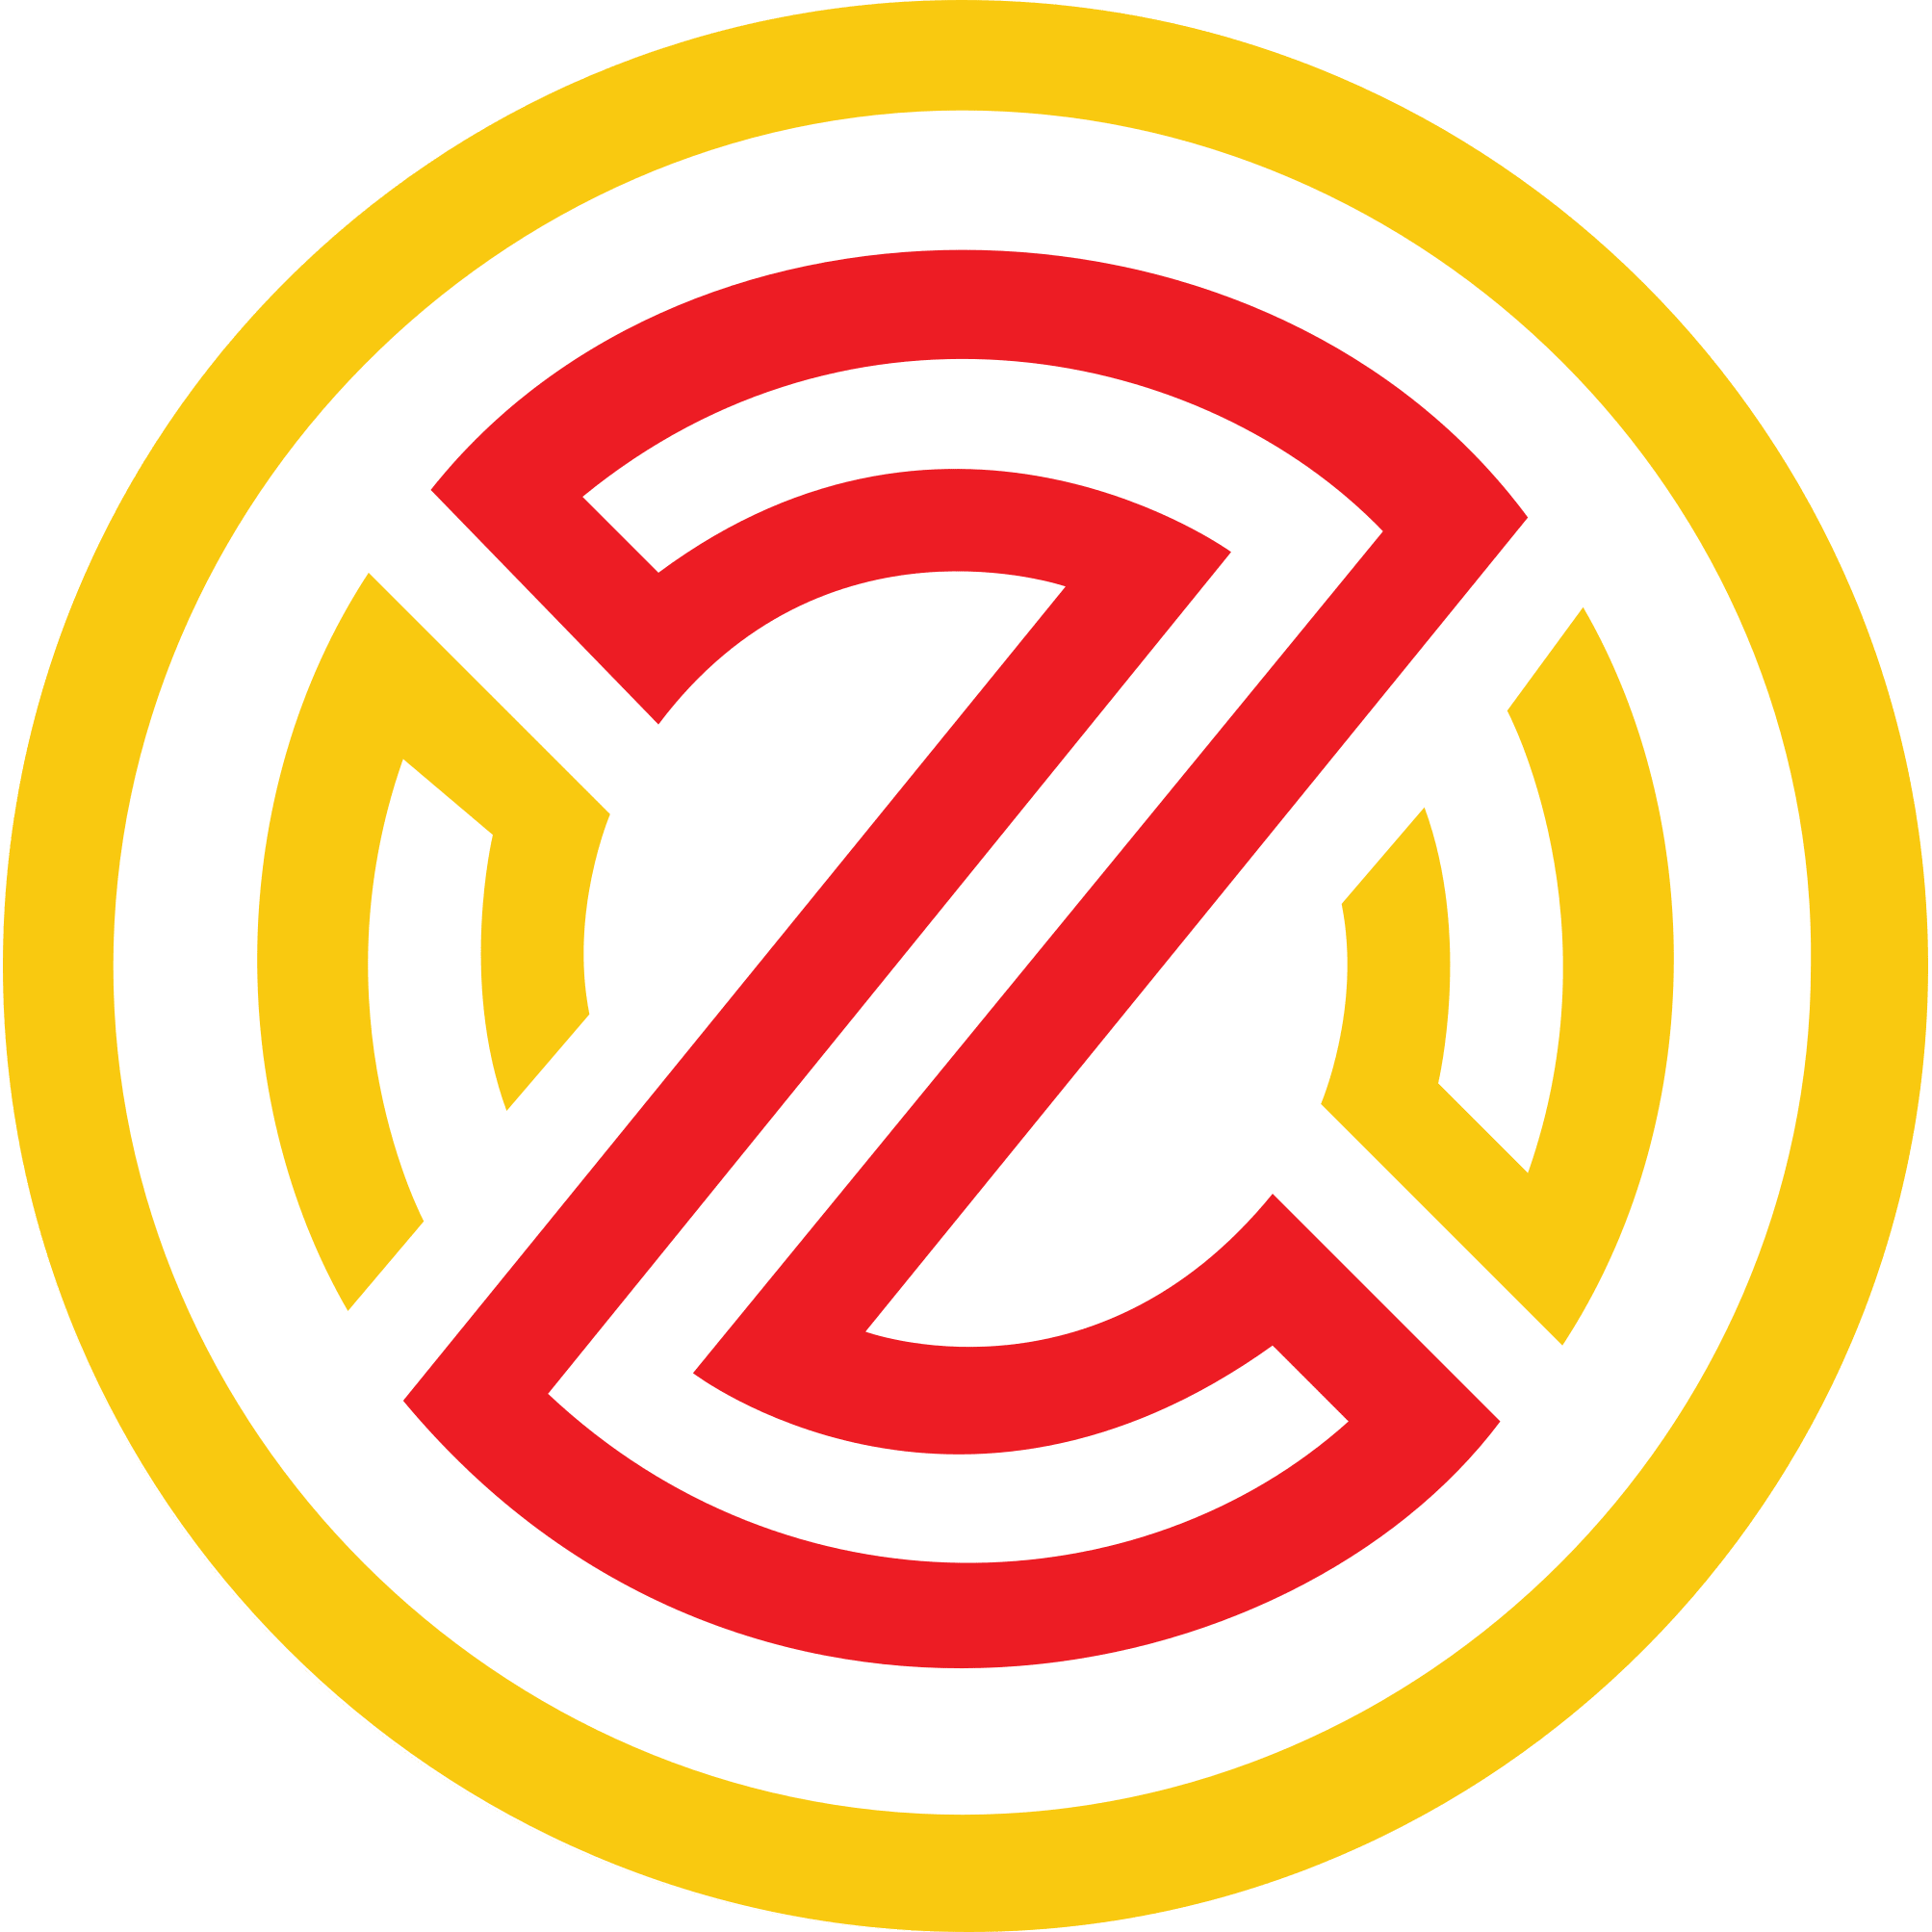 Zelwin logo in png format